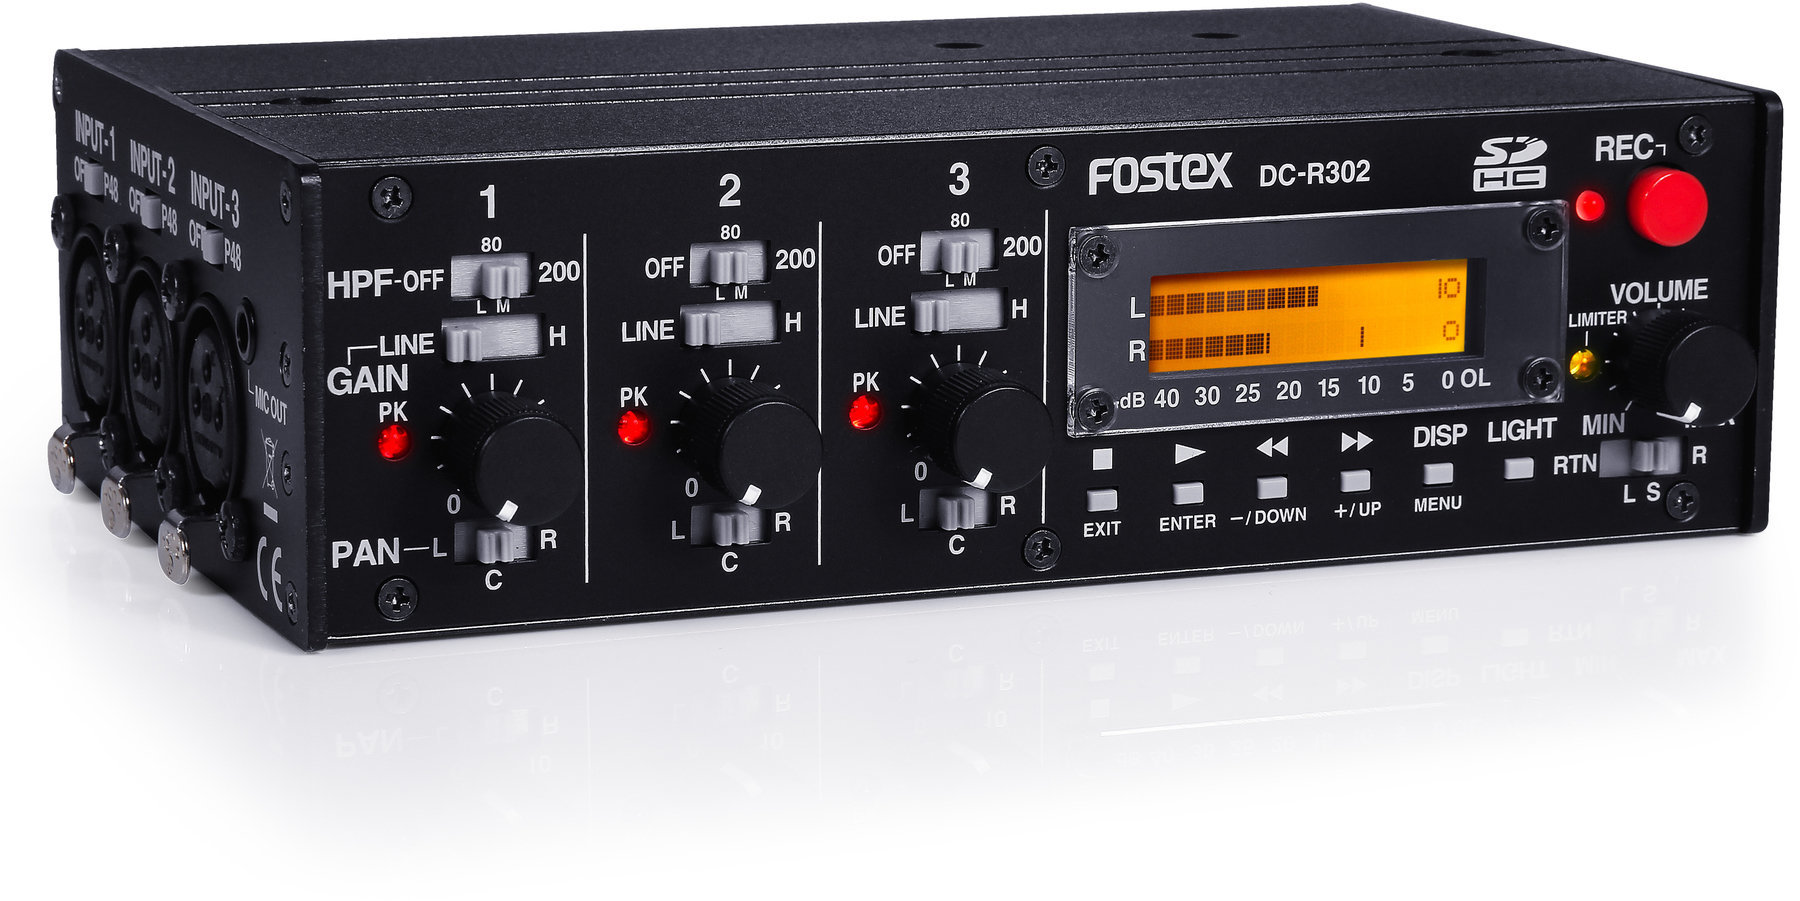 Grabadora multipista Fostex DC-R302